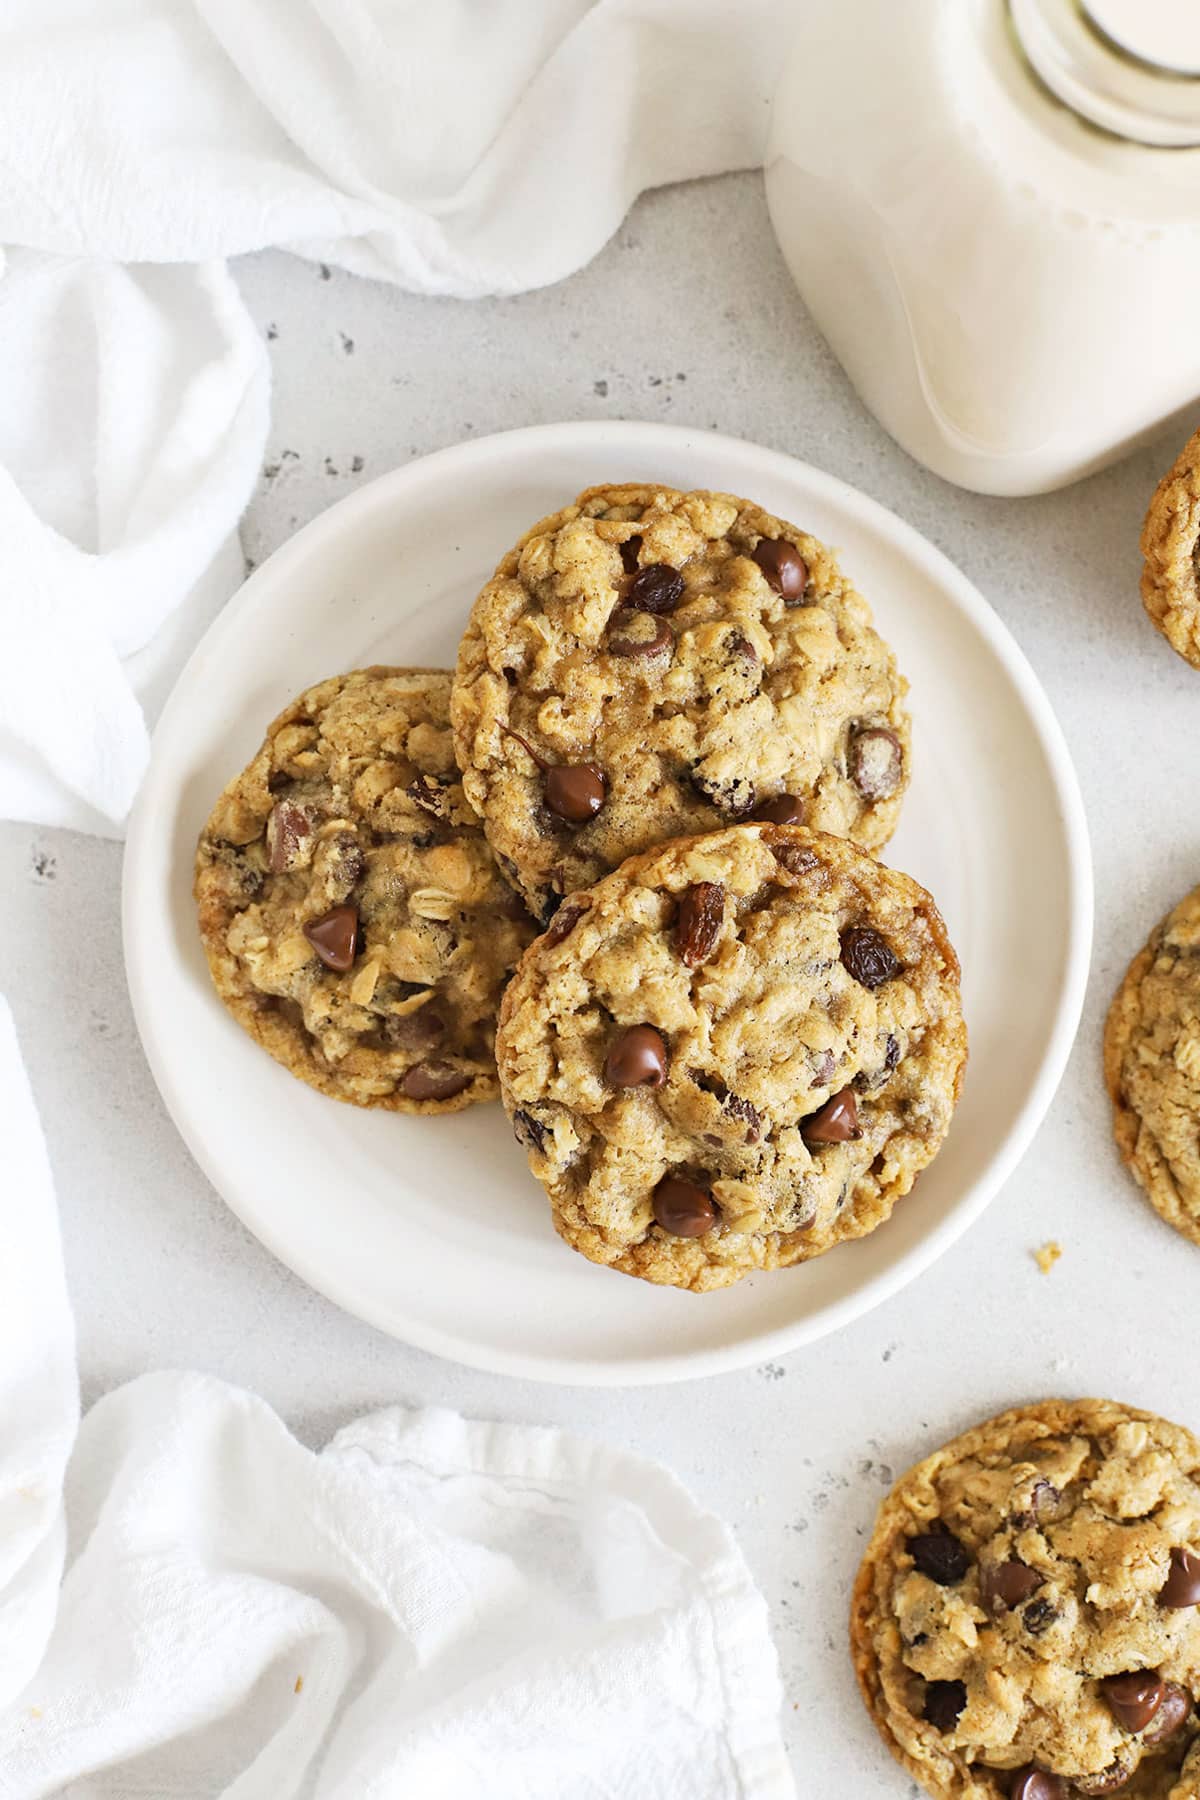 Gluten-free oatmeal raisin cookies on a white plate